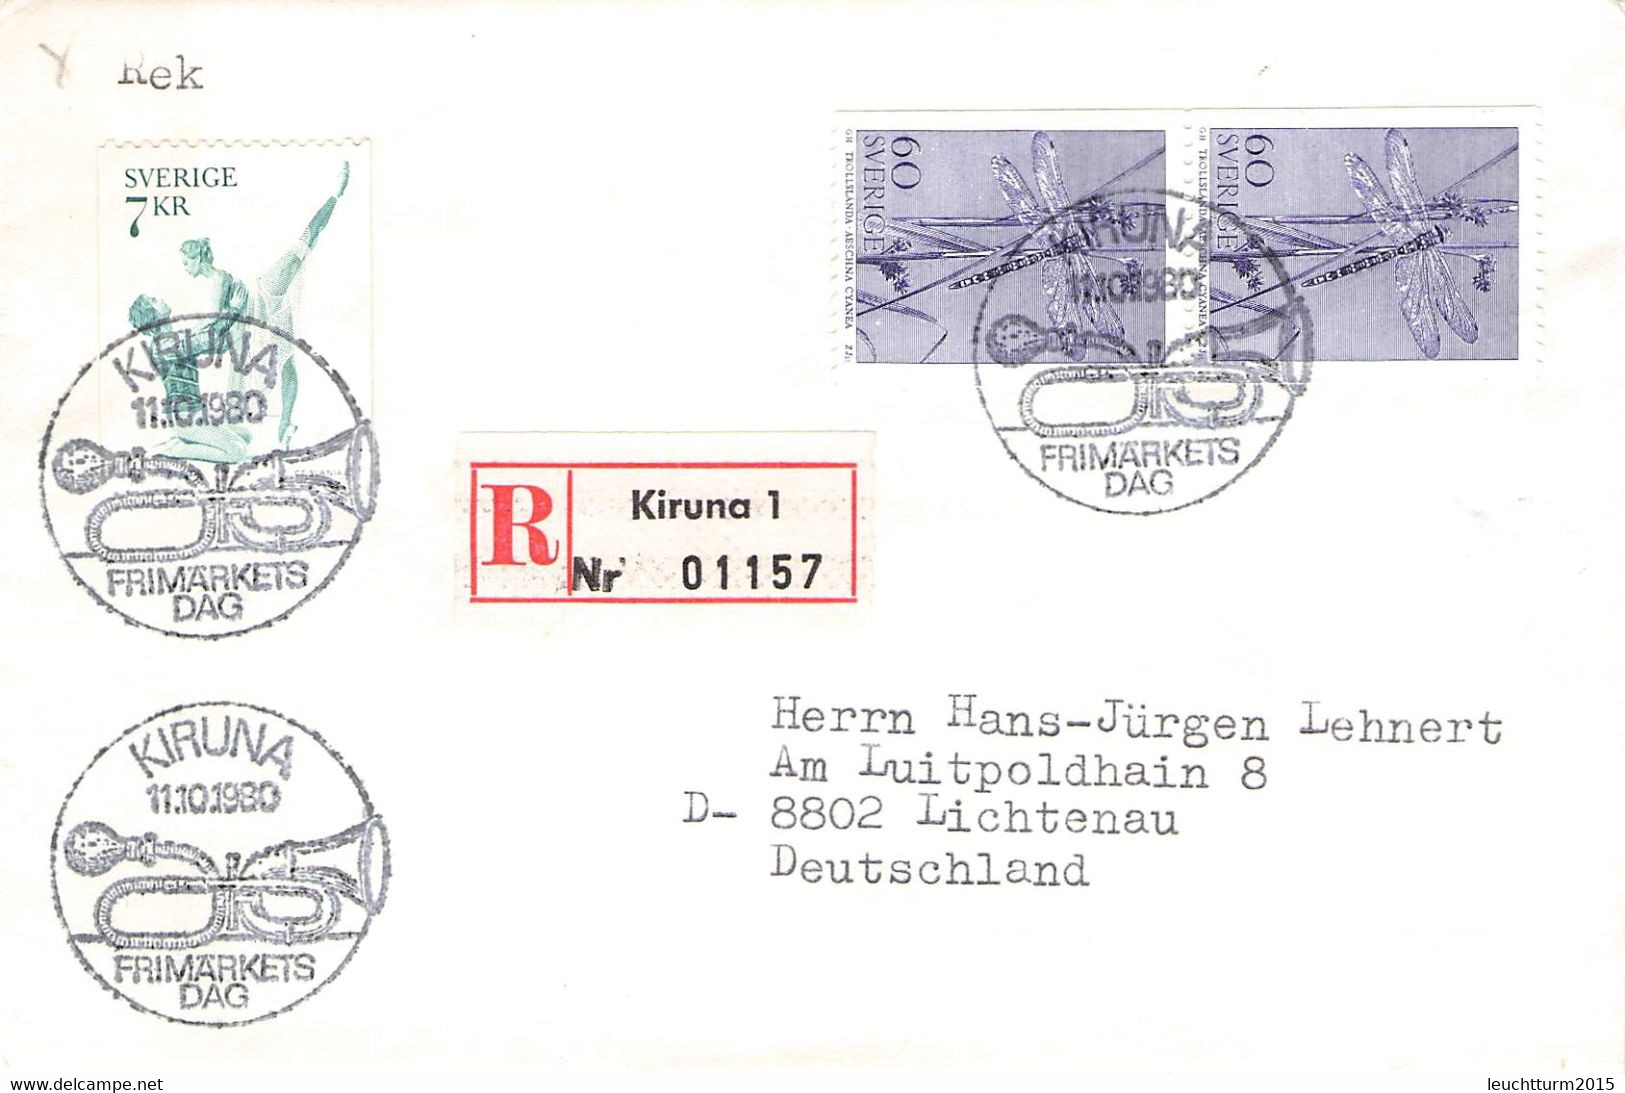 SWEDEN - REGISTERED MAIL 1980 KIRUNA > GERMANY / ZL271 - Storia Postale